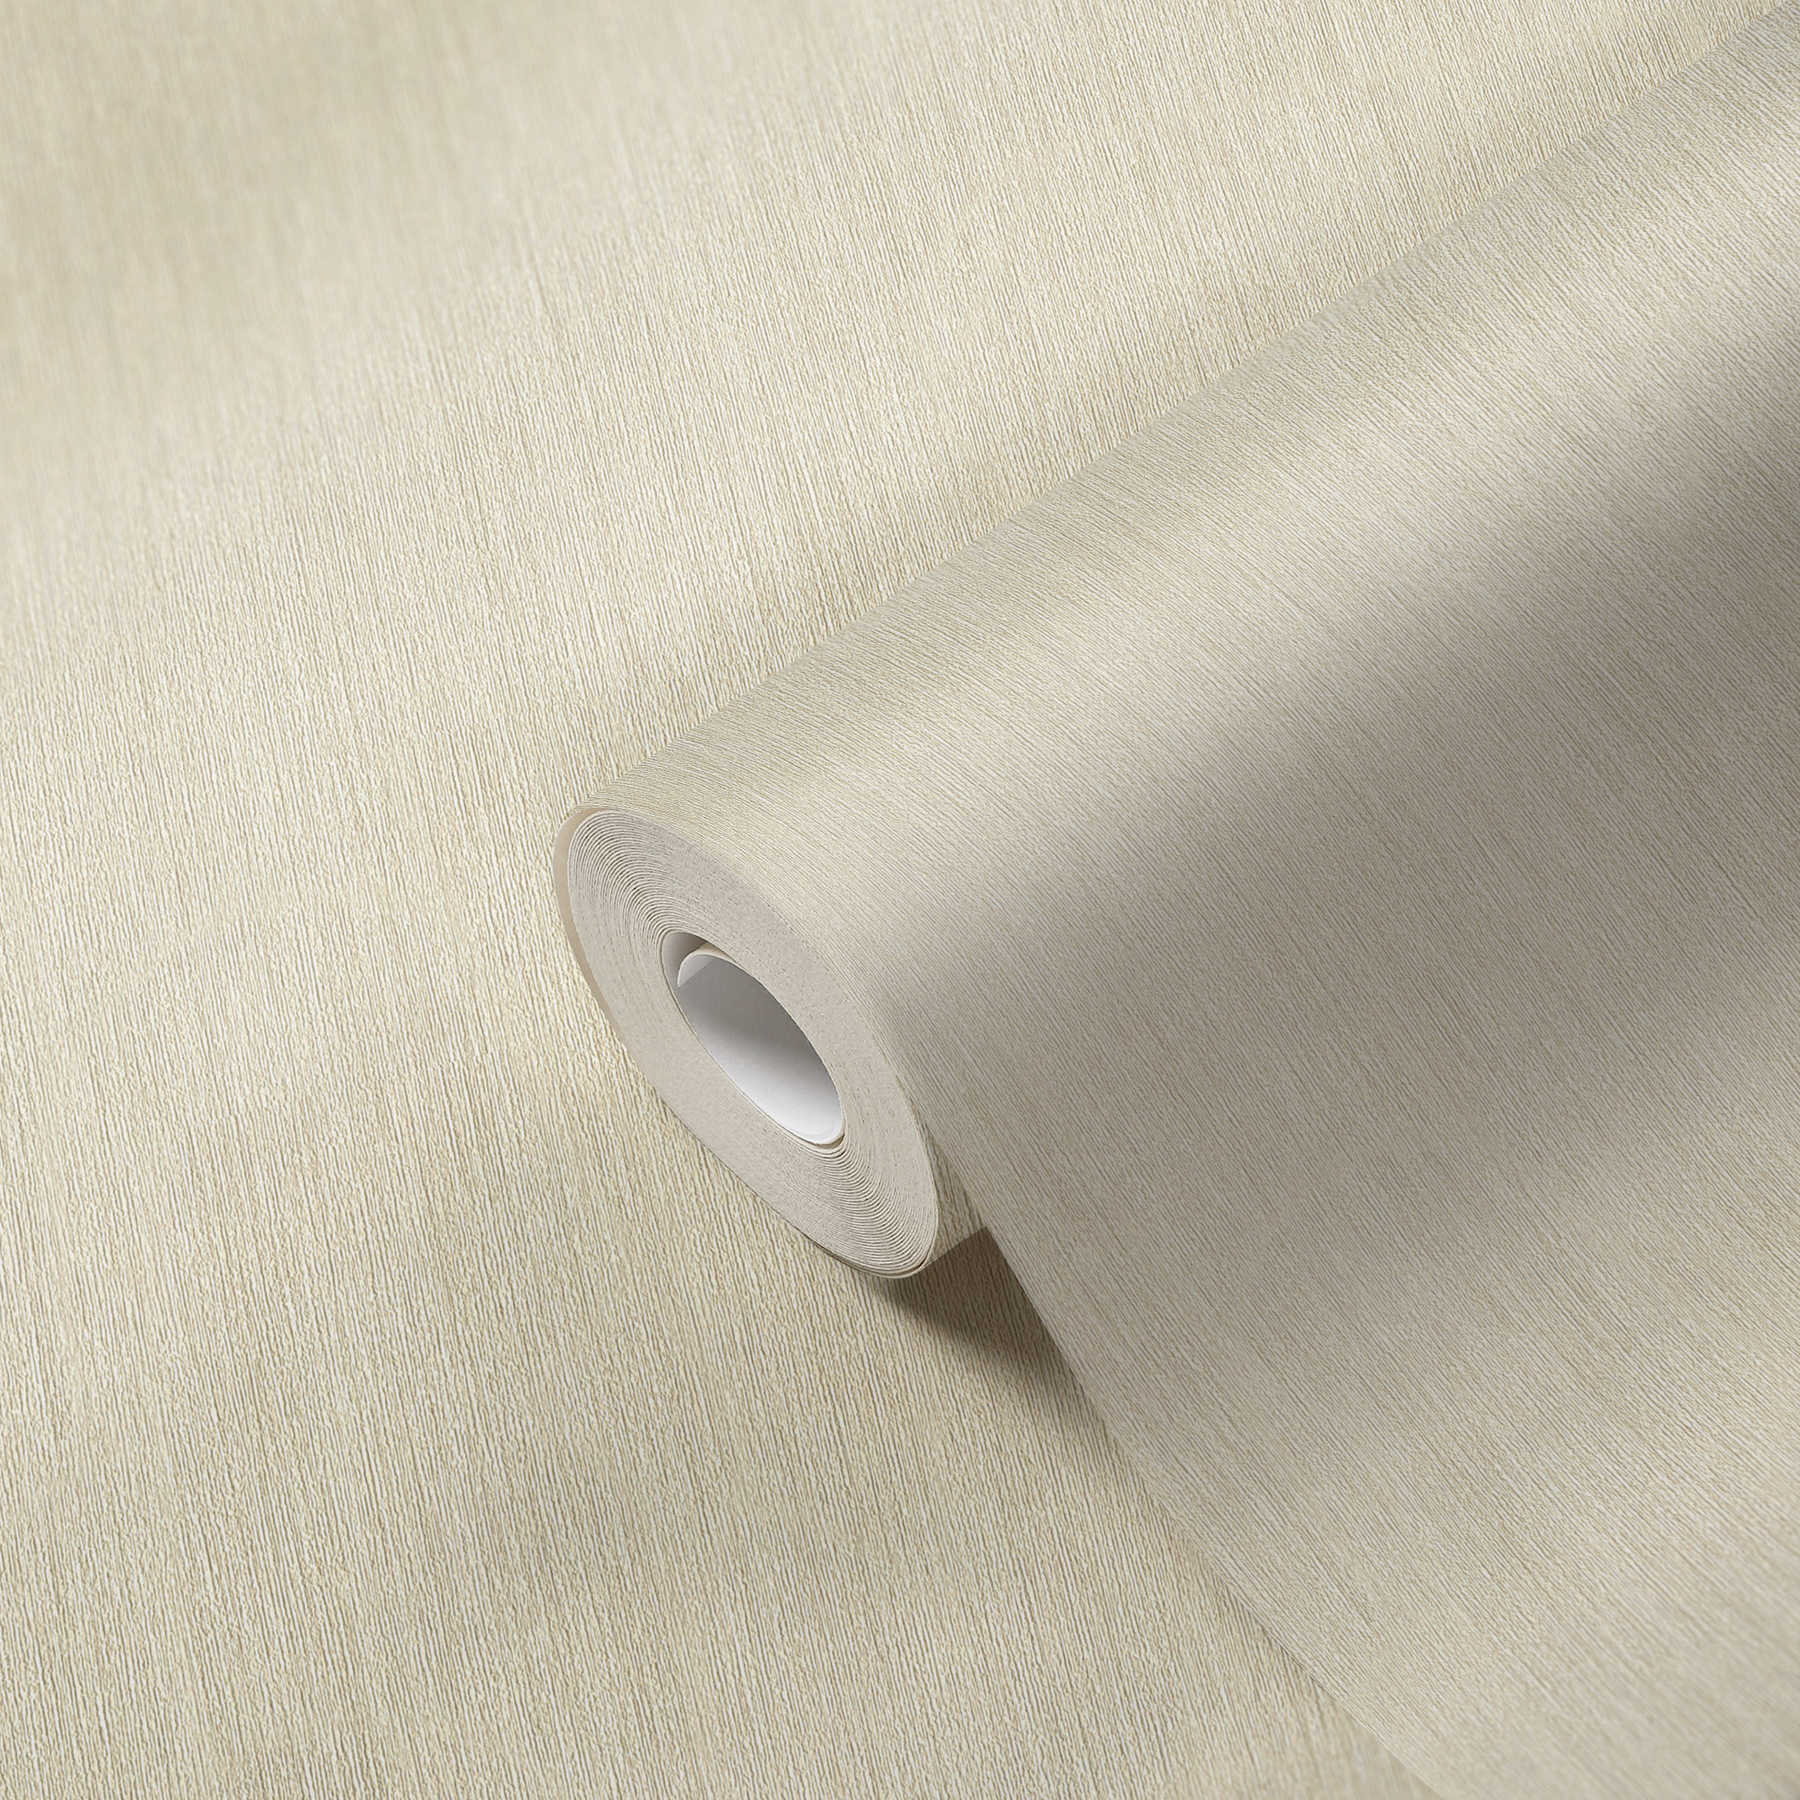             Non-woven wallpaper light beige with mottled colour effect
        